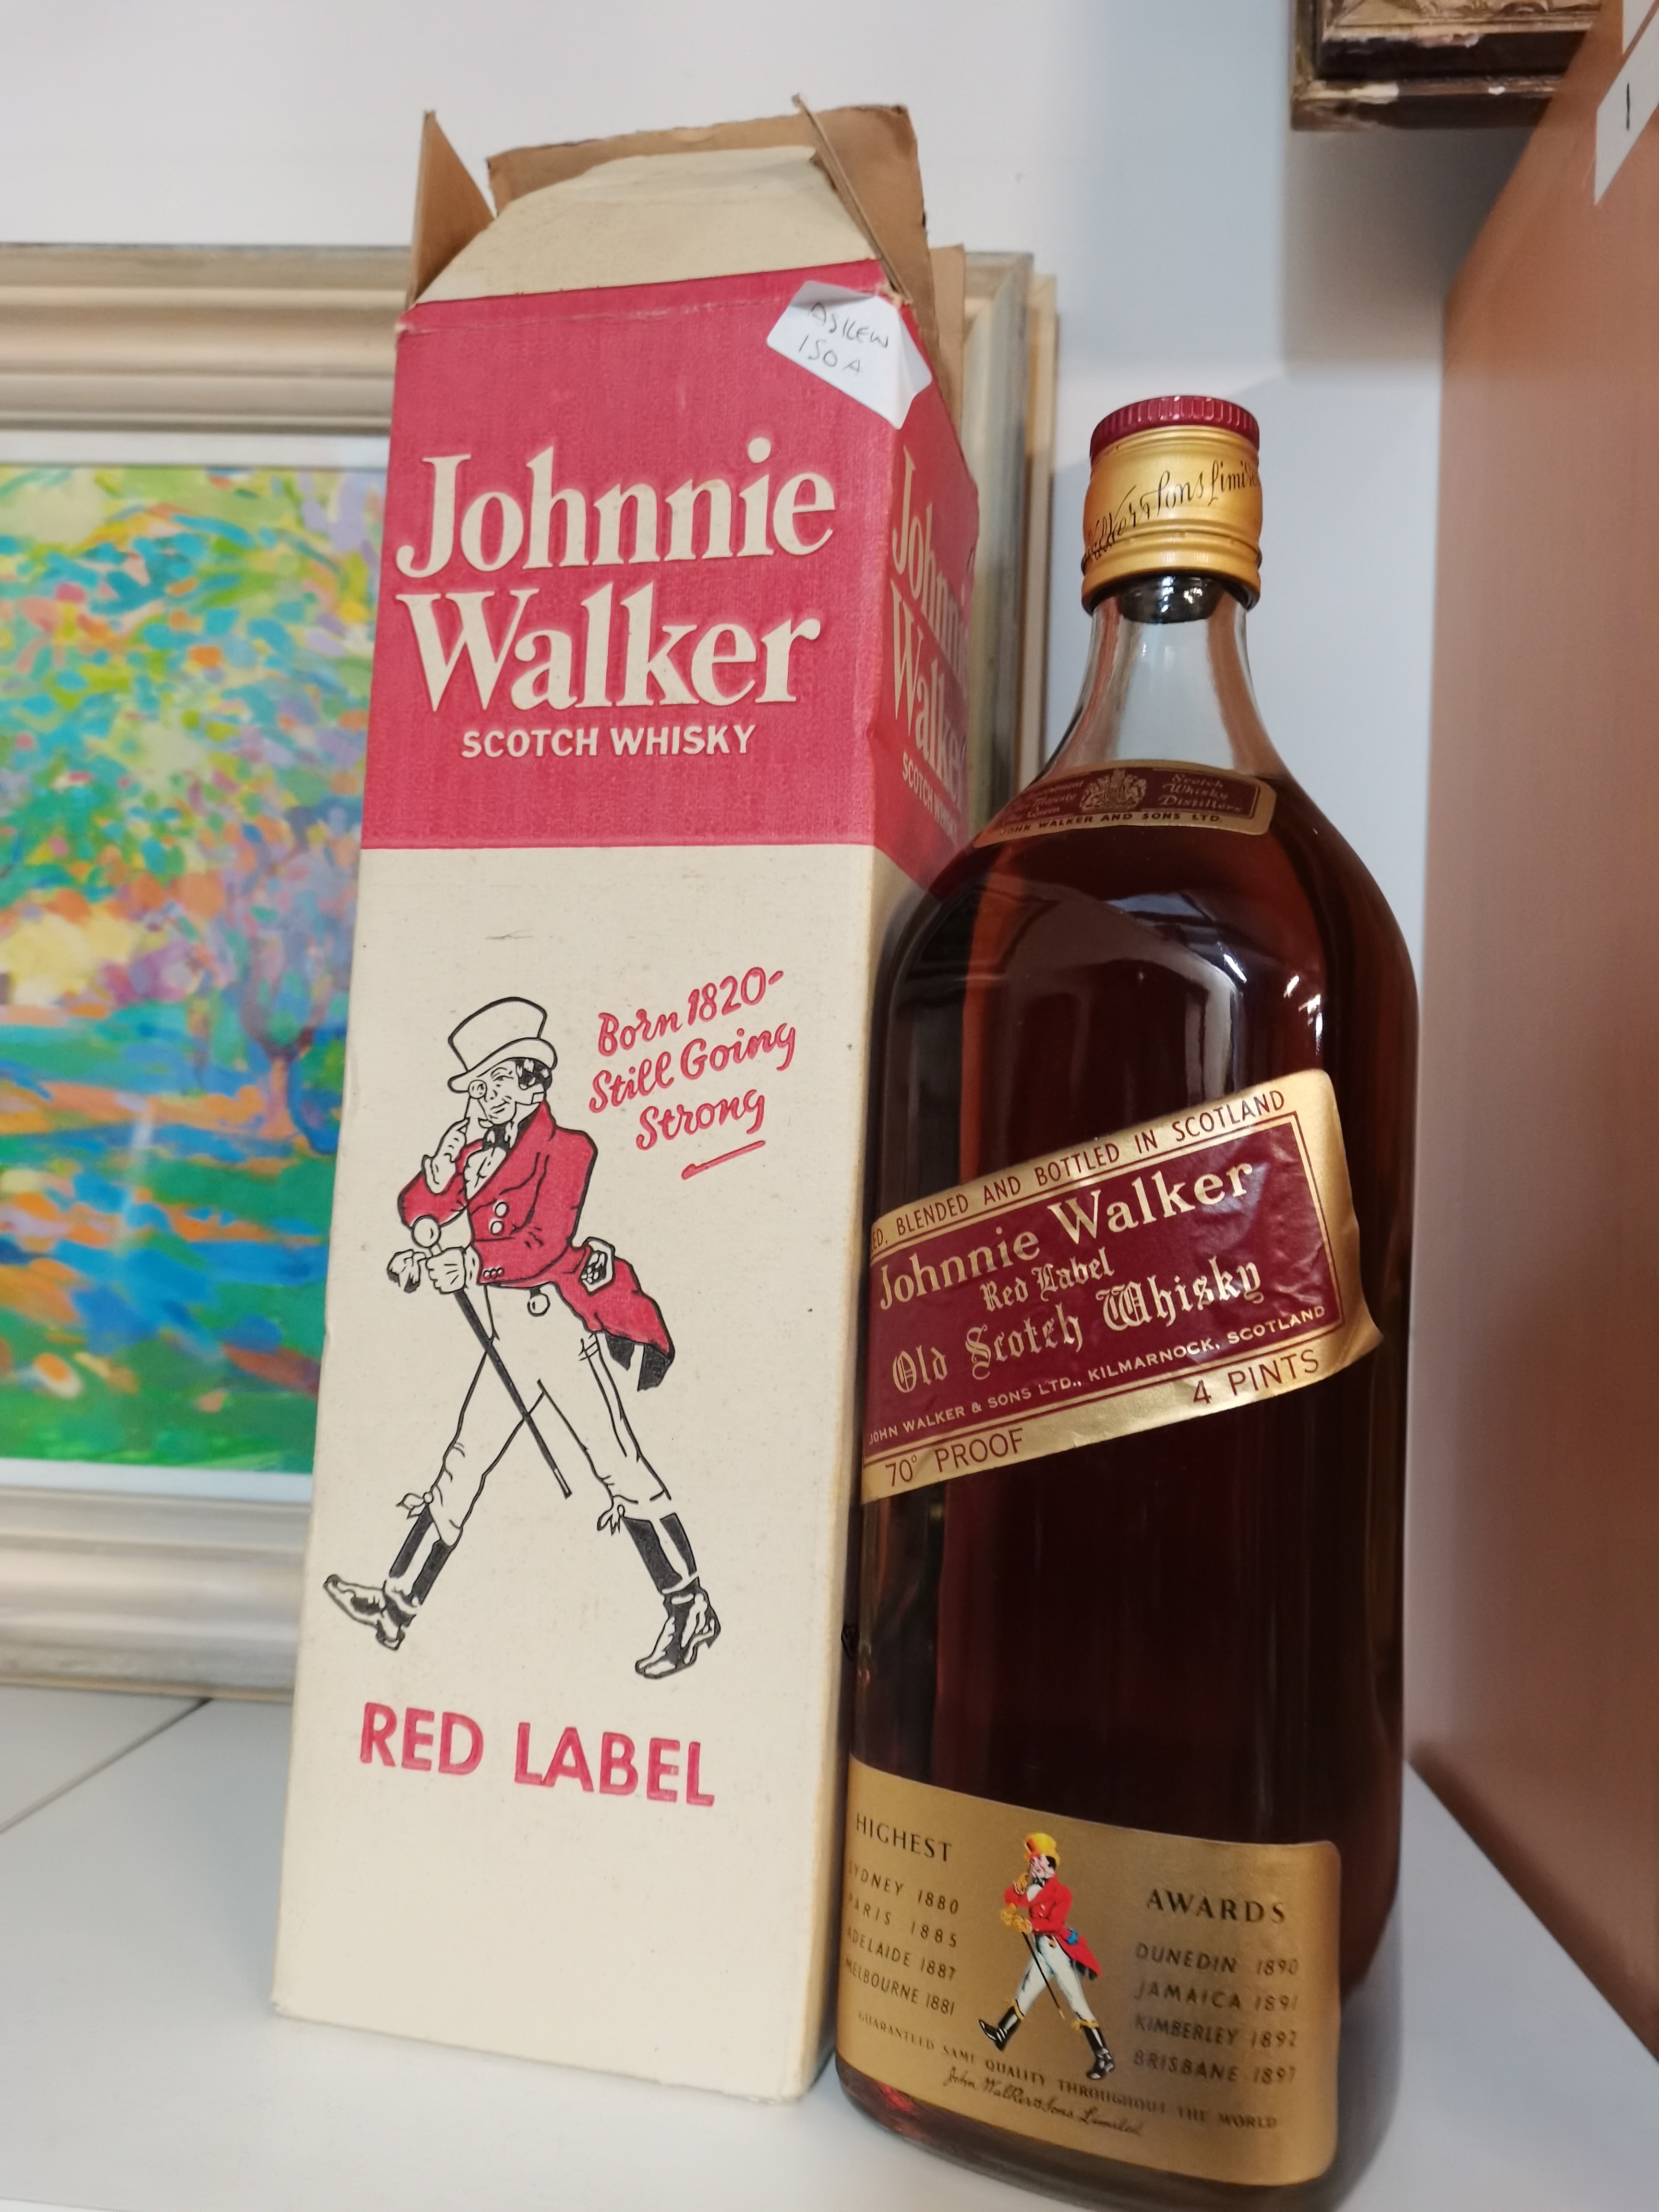 4 pint bottle Johnnie Walker Red Label Old Scotch Whisky in original box